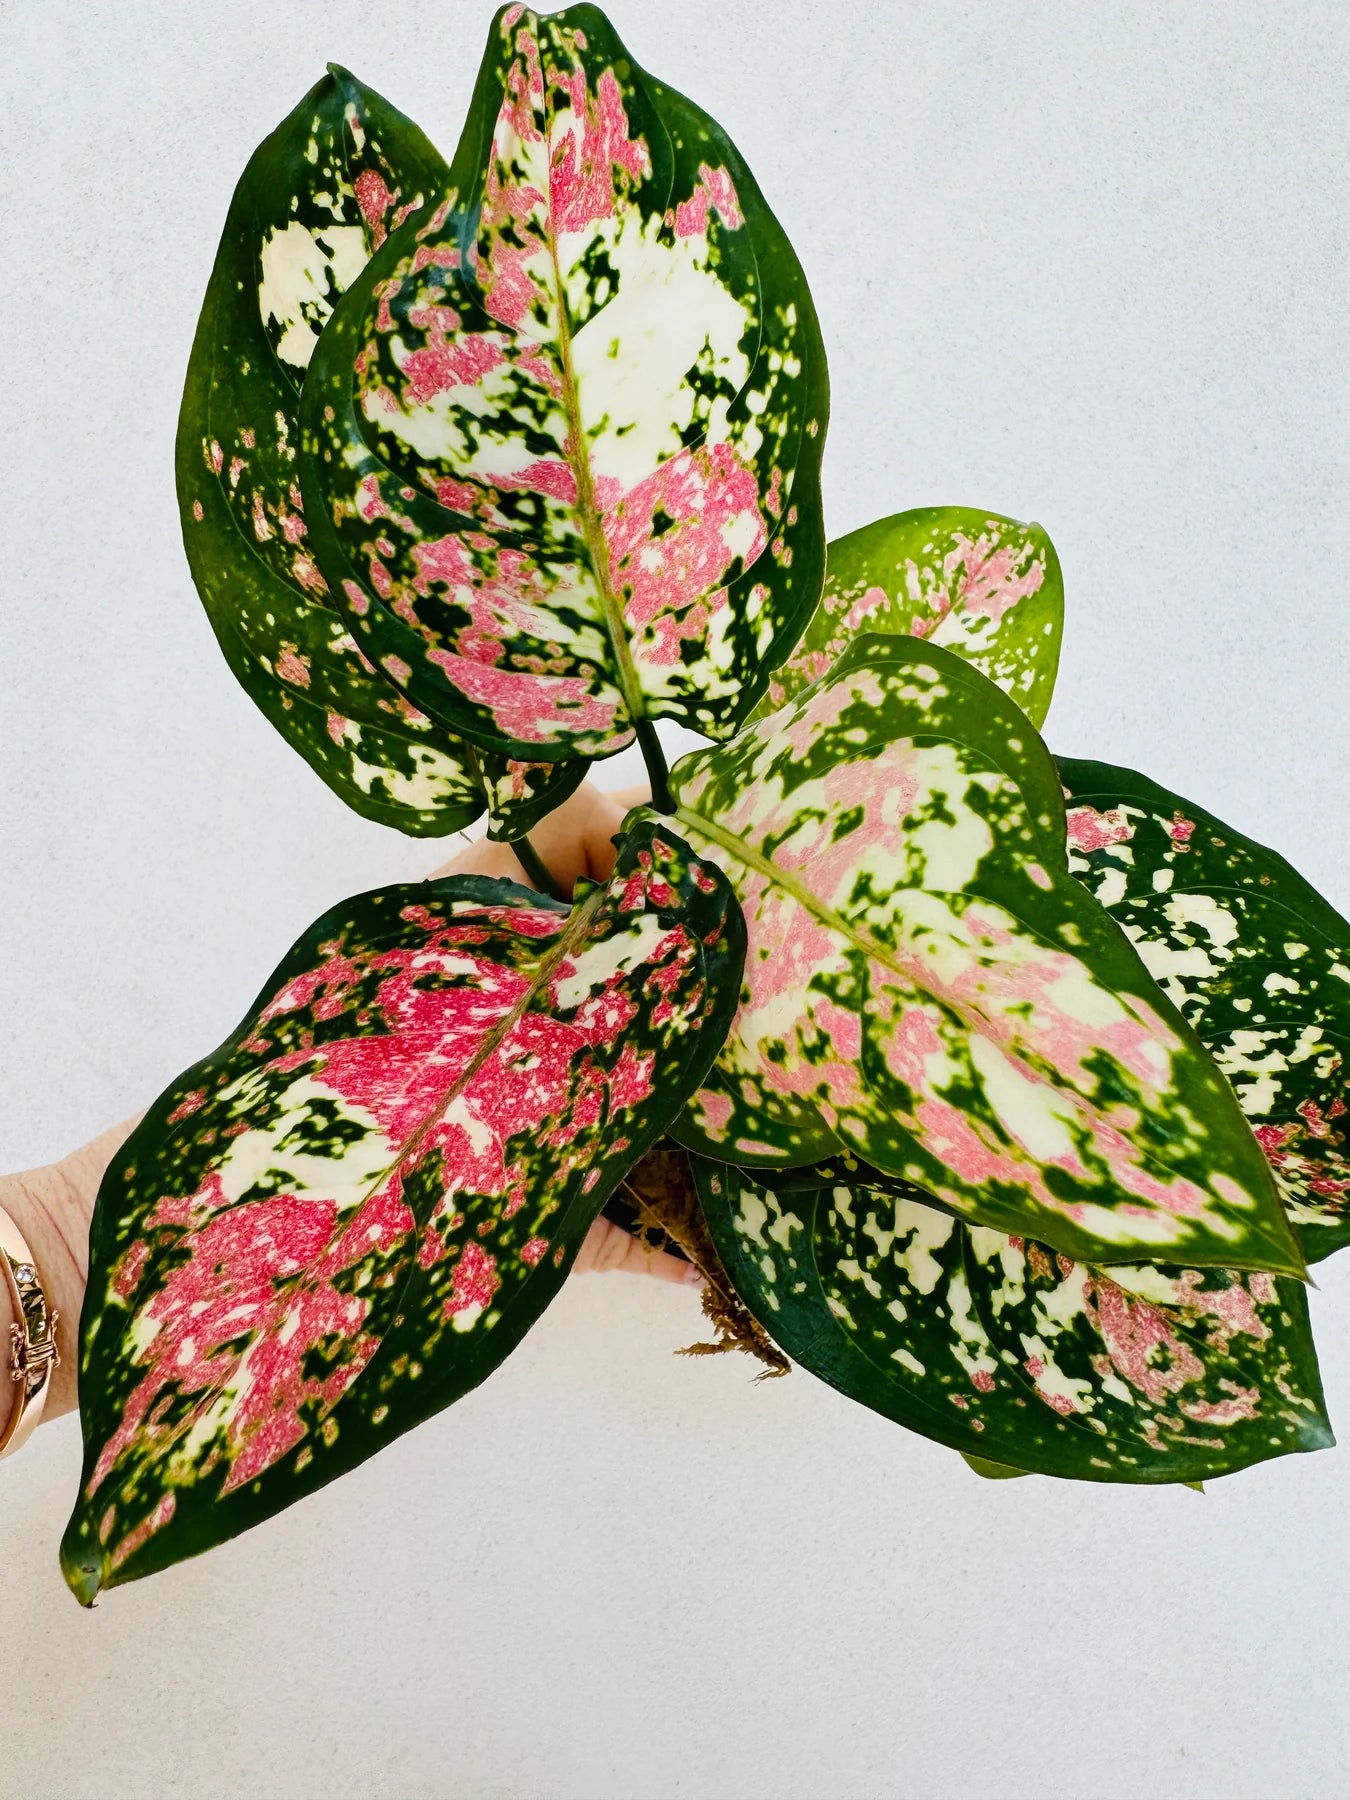 Aglaonema Anyamanee Tricolor - Plant Vault Encinitas California - rare houseplant for sale